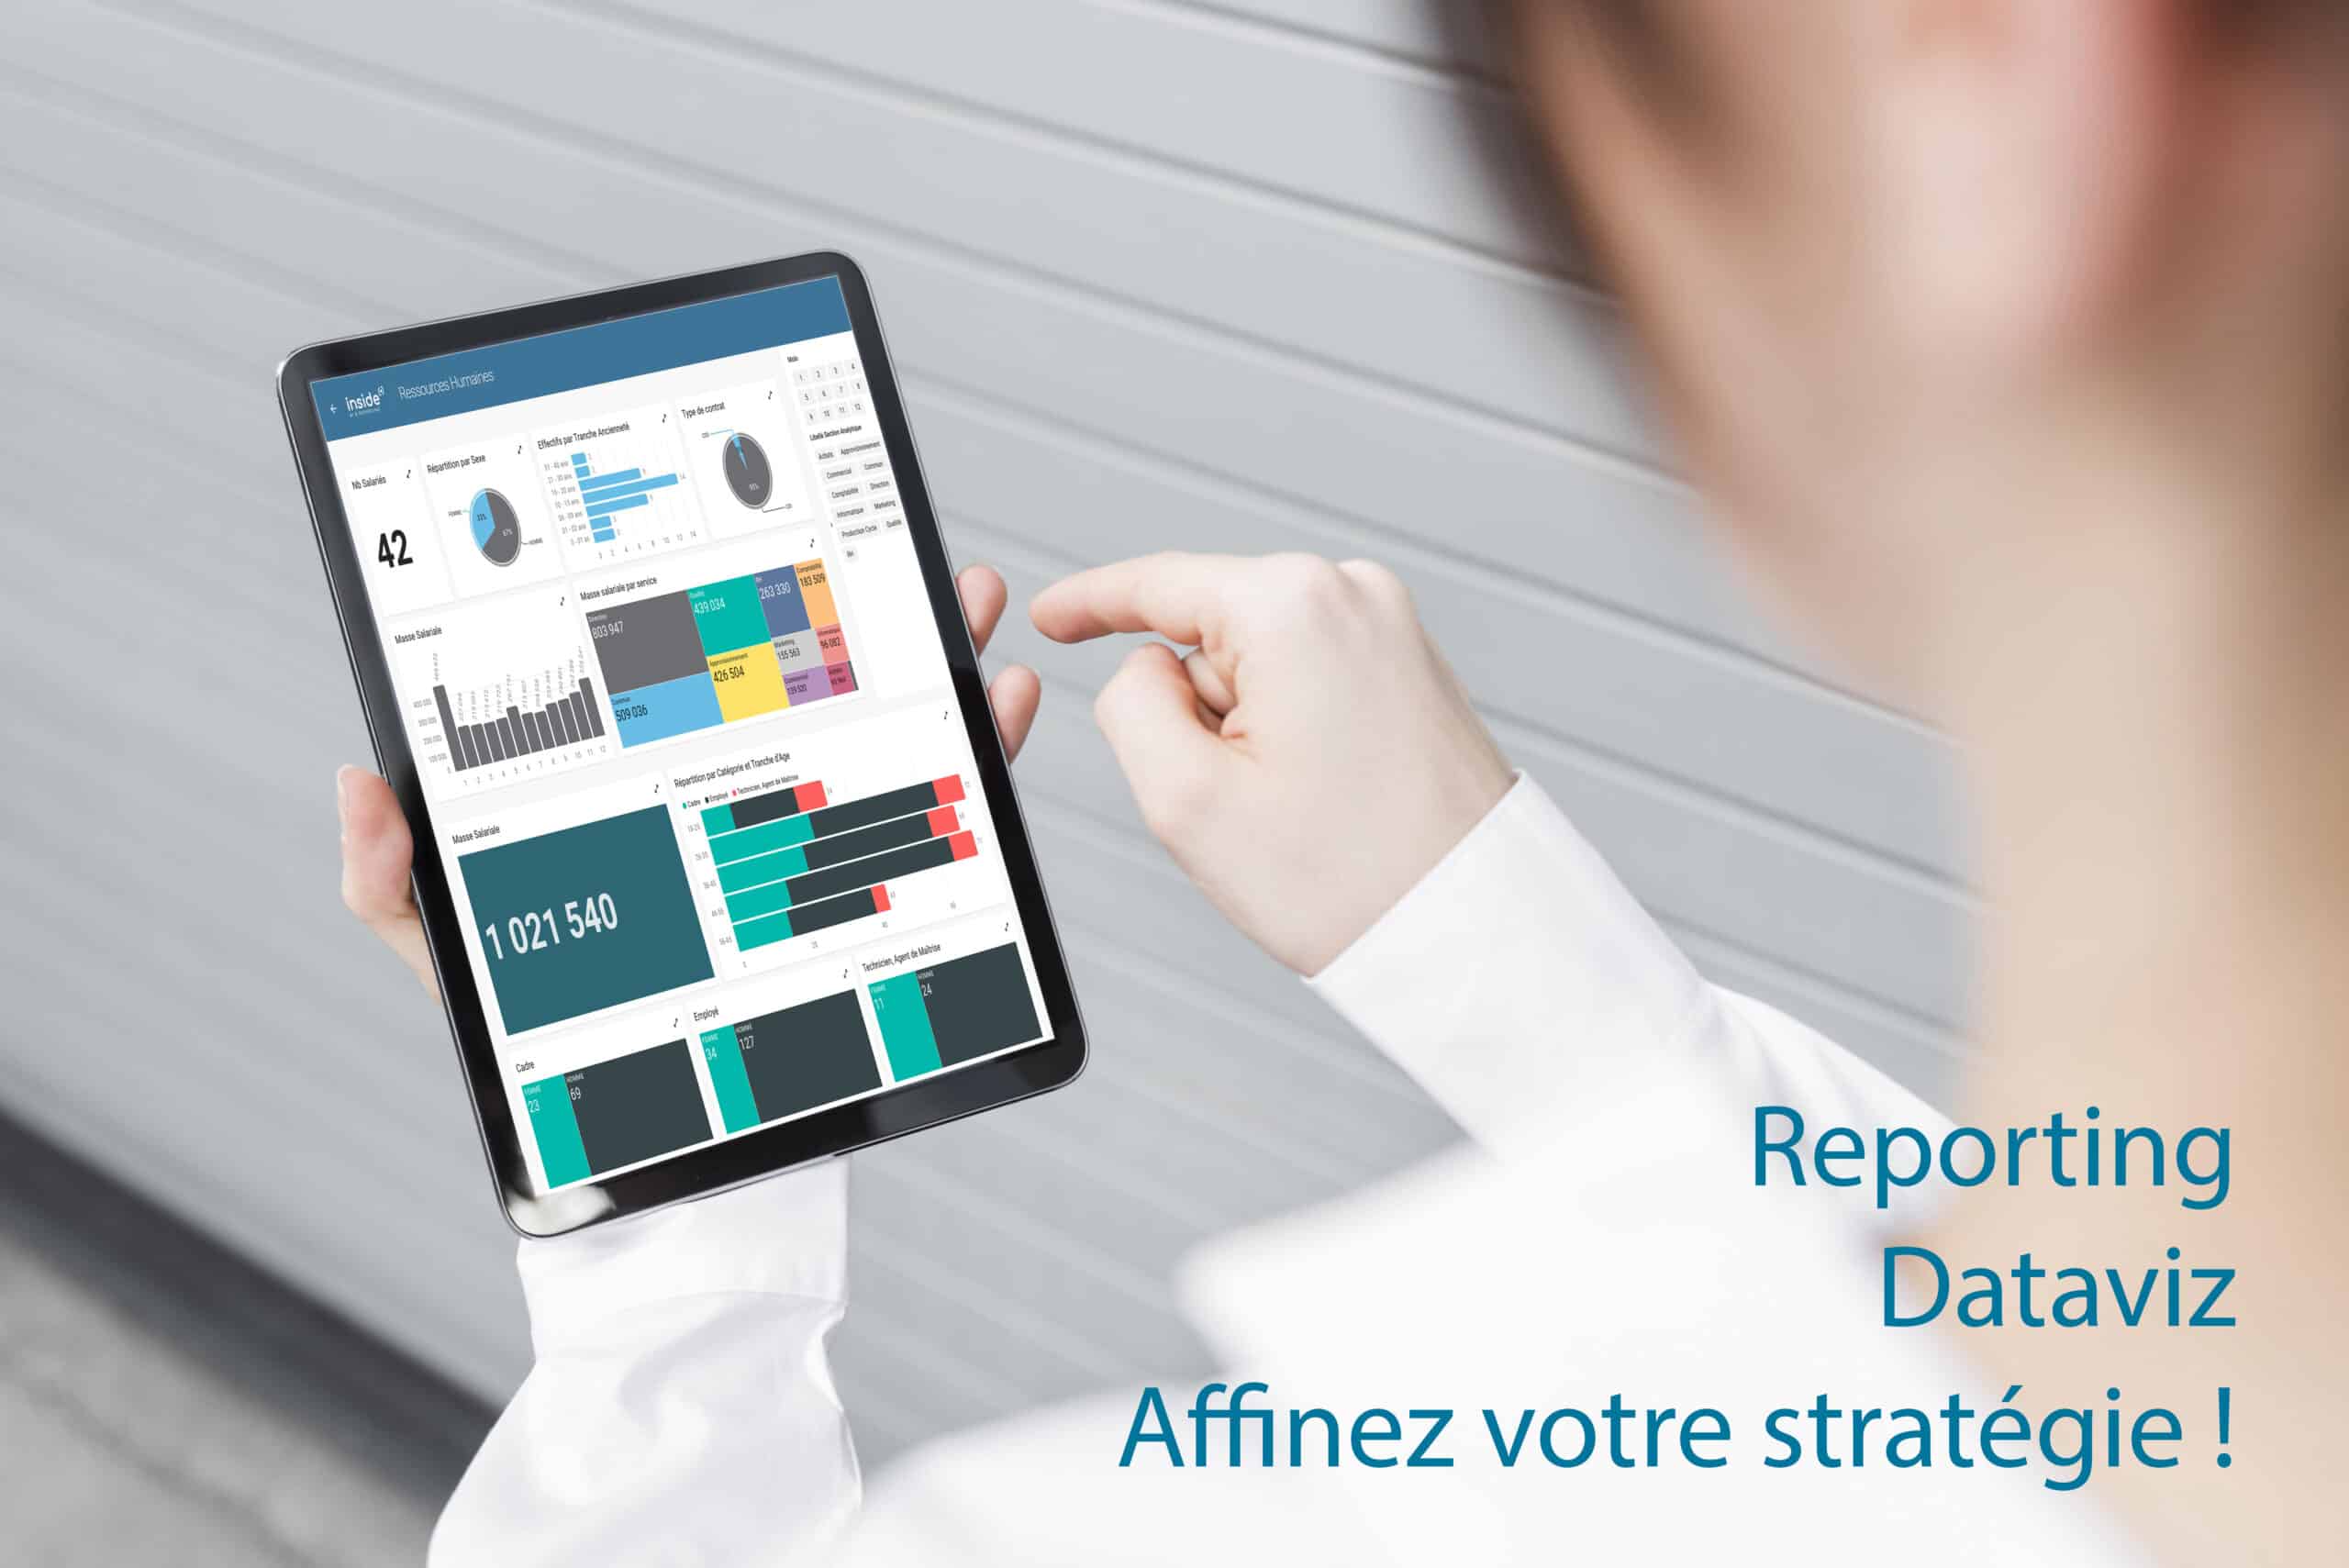 Infineo-Inside_Reporting_Dataviz - Affiner votre stratégie